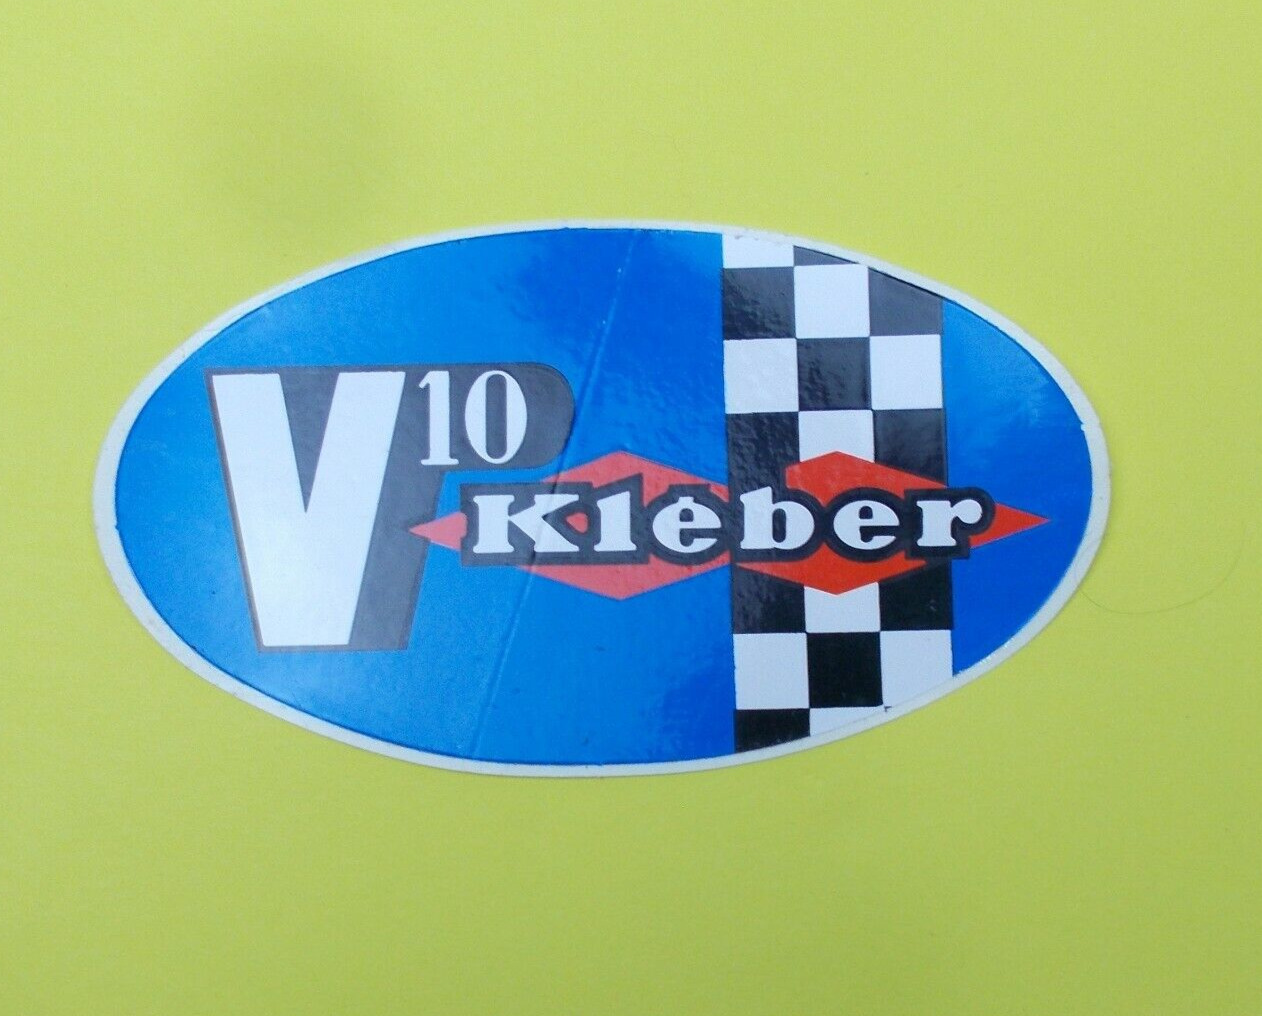 Vintage  NOS Kleber tires checkered  flag  rally racing  oval decal sticker 